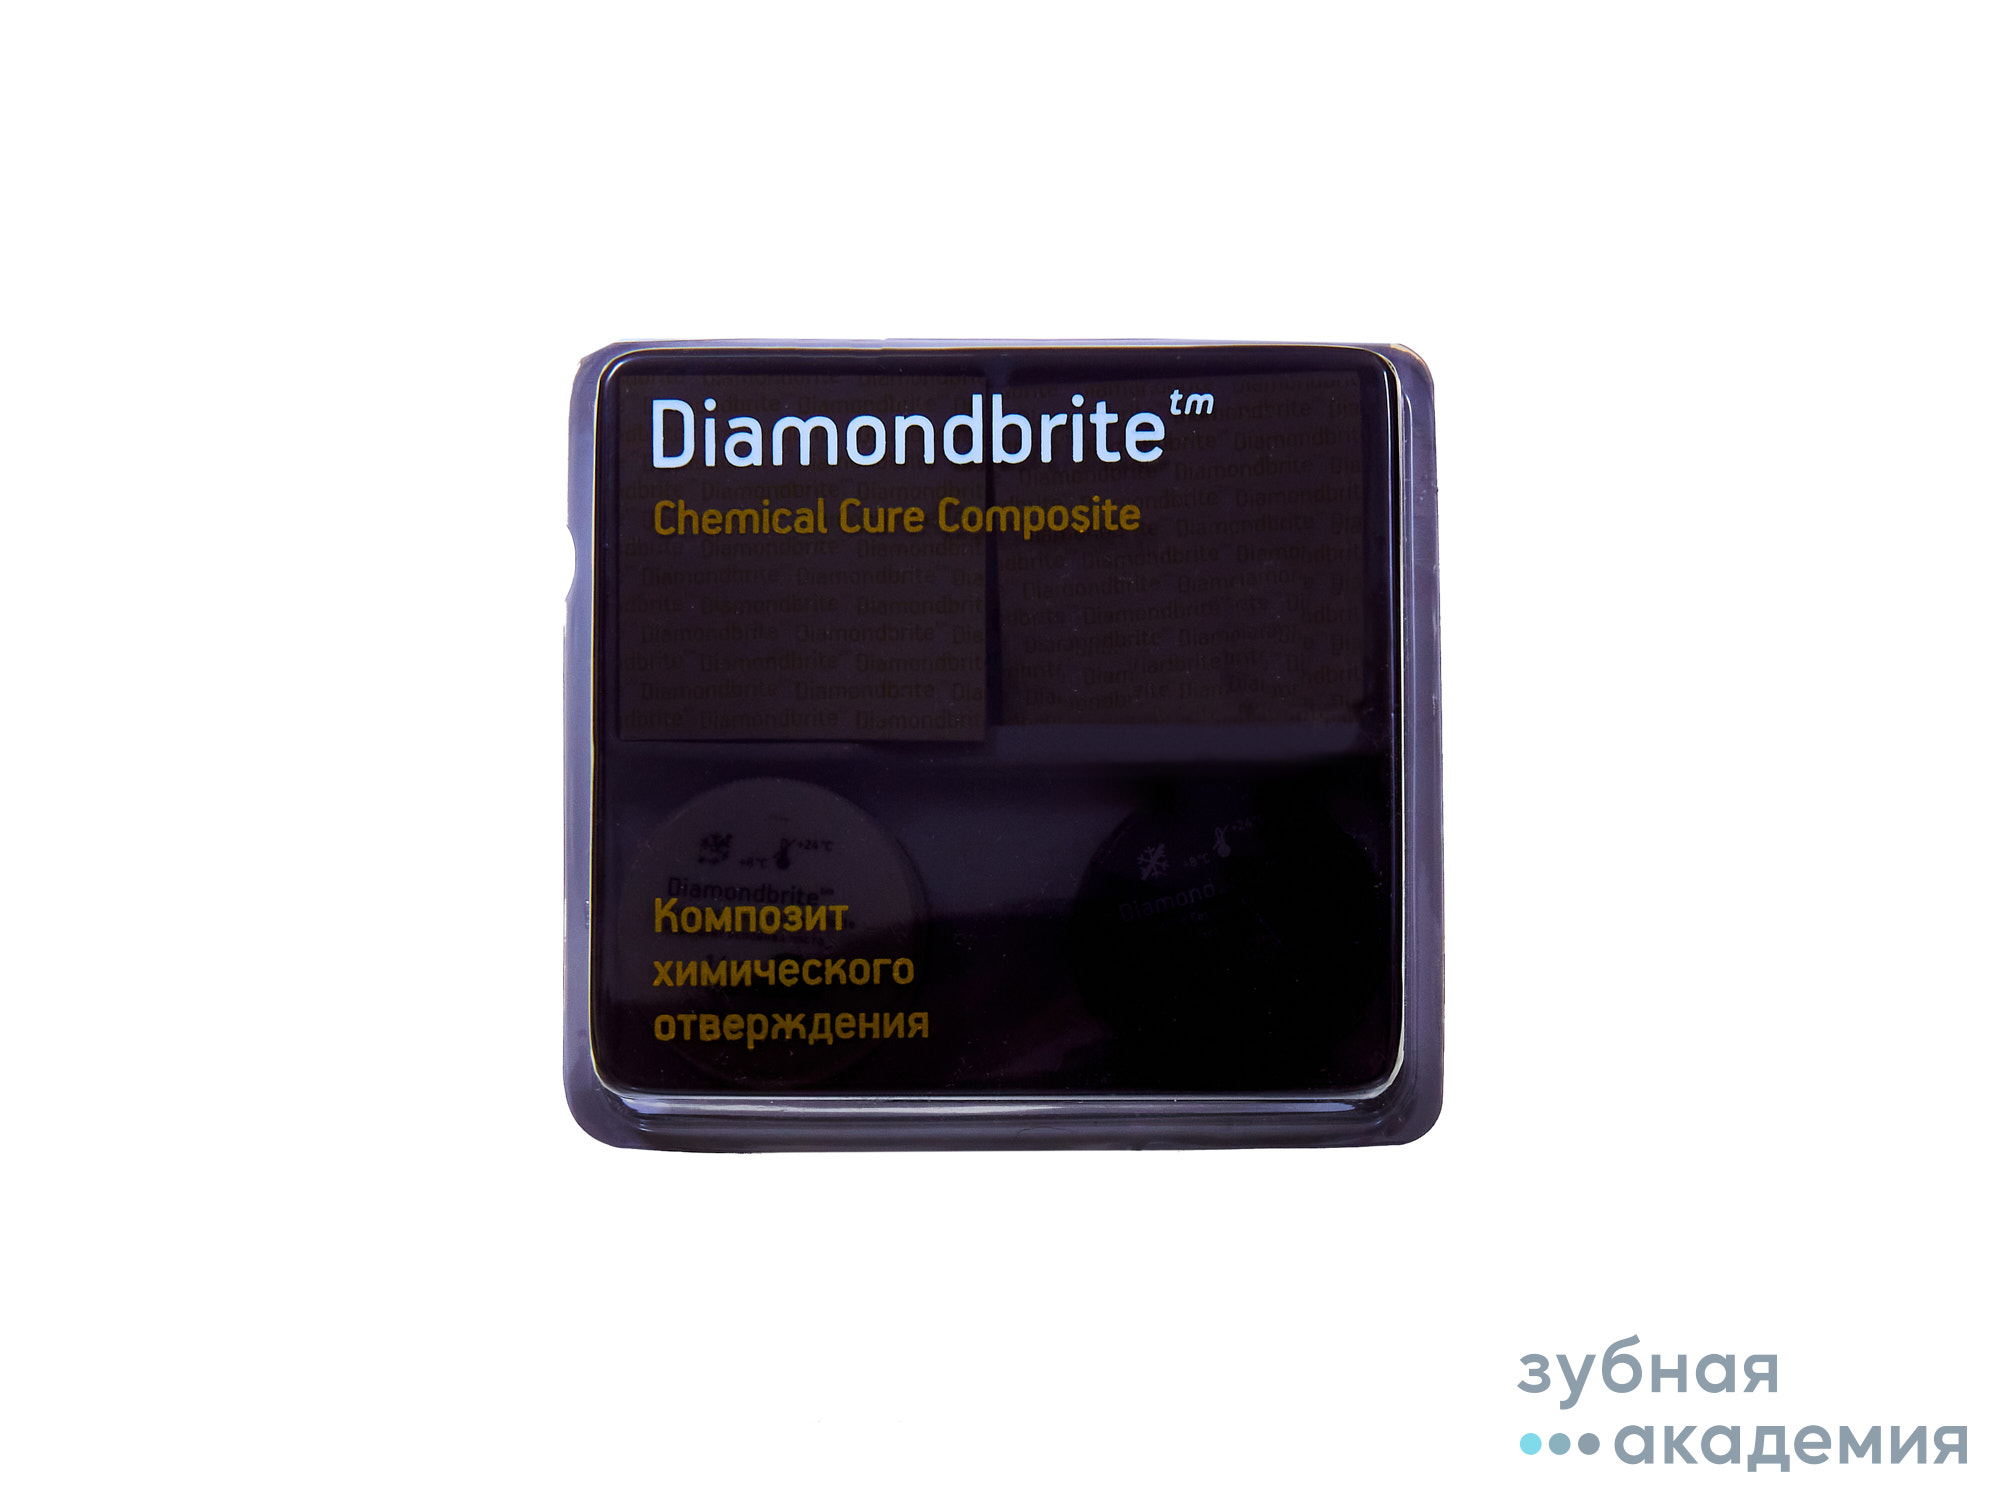 DiamondBrite/Даймондбрайт упаковка 14г/14г/Confi-Dental Products Co/ США